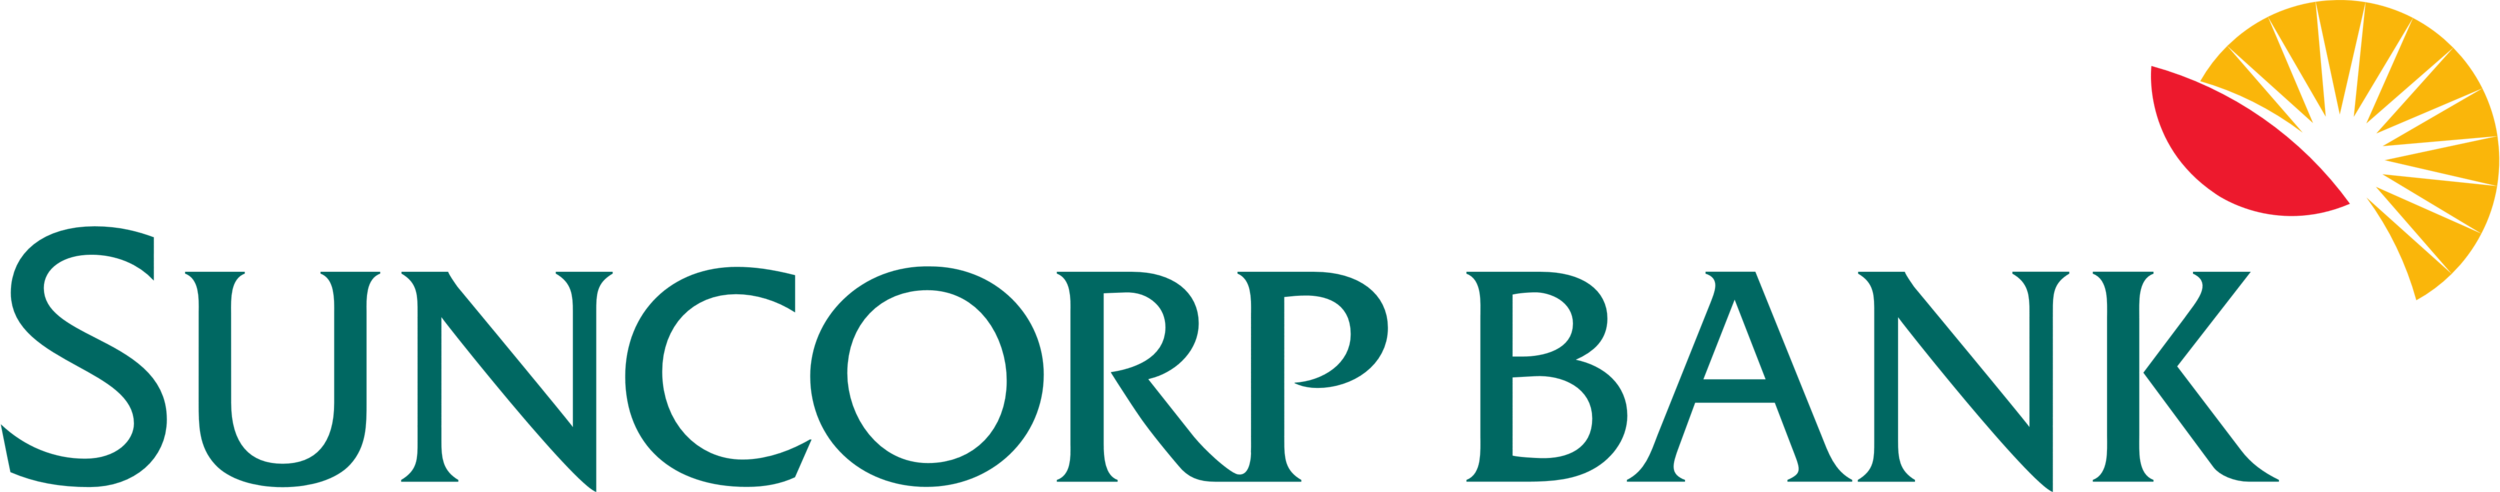 Suncorp_bank_logo.png